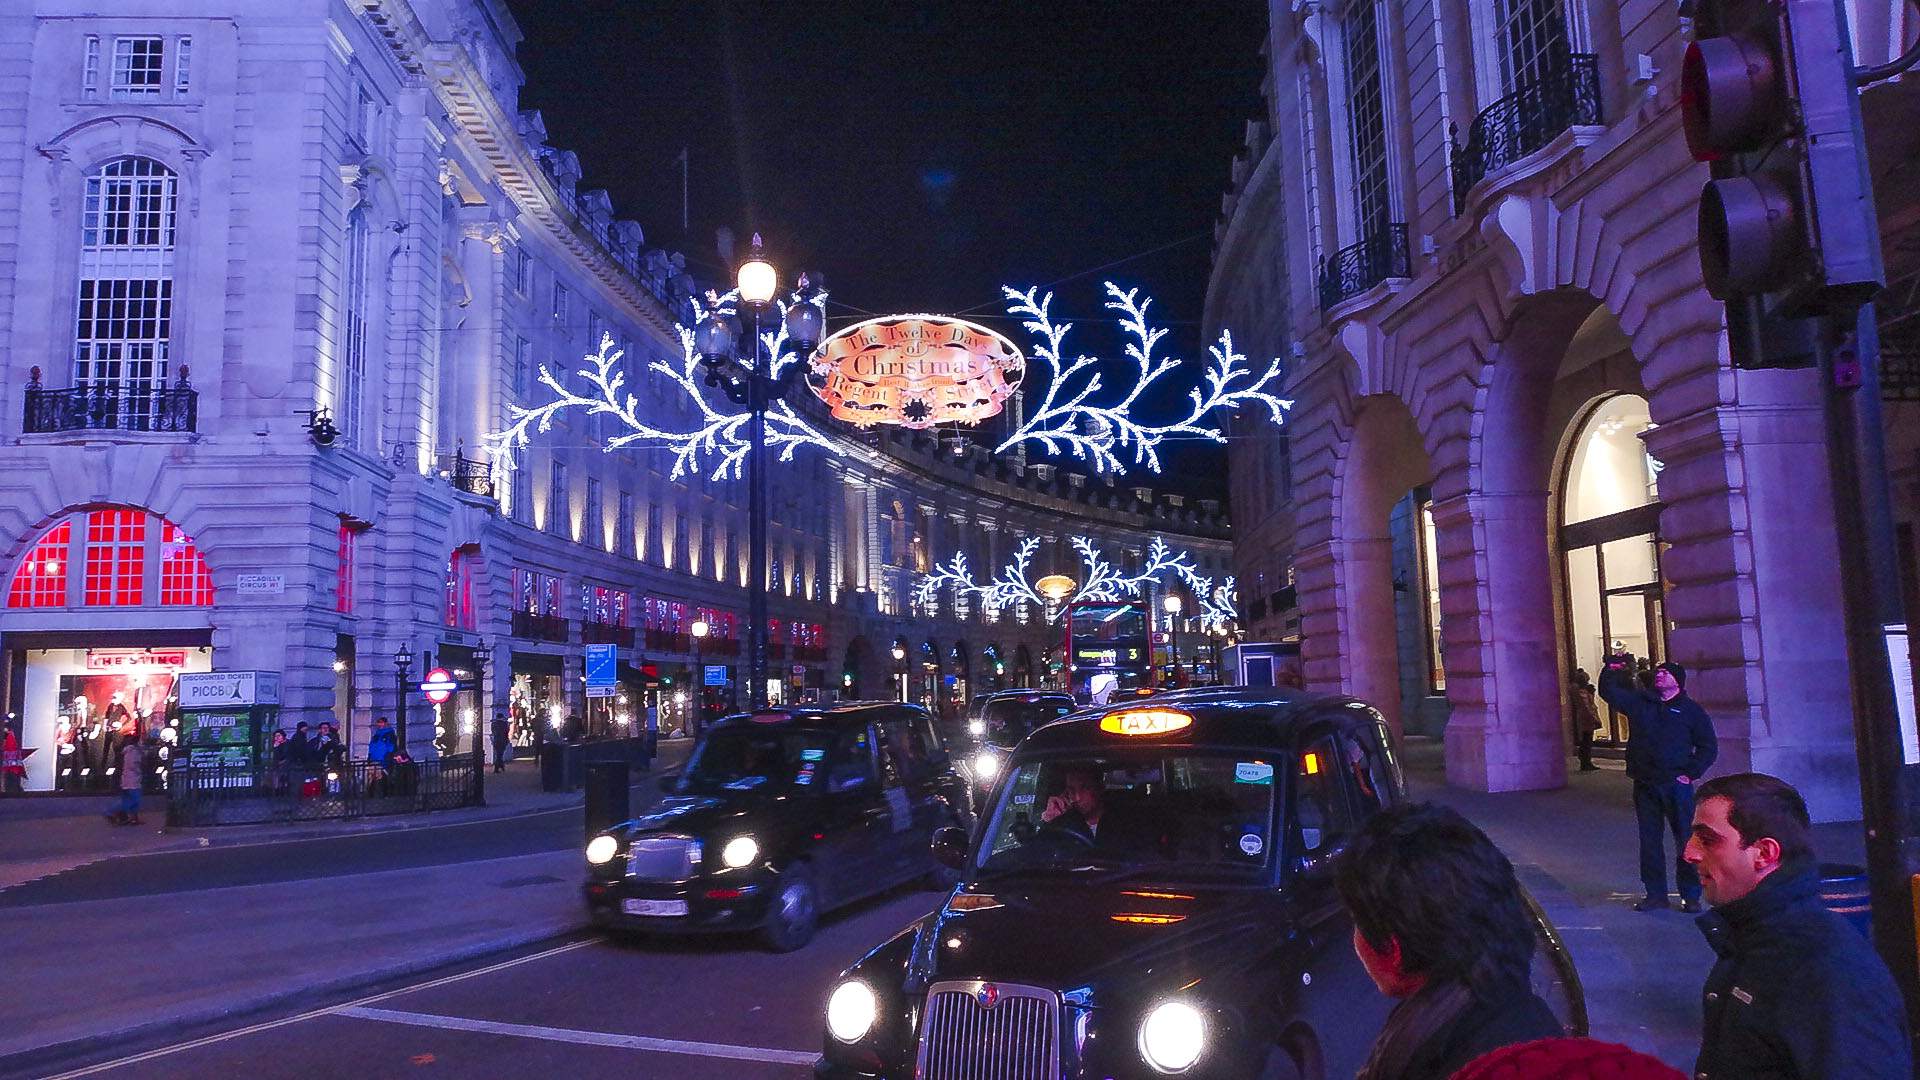  London  Christmas  Decorations  HulaHunnie